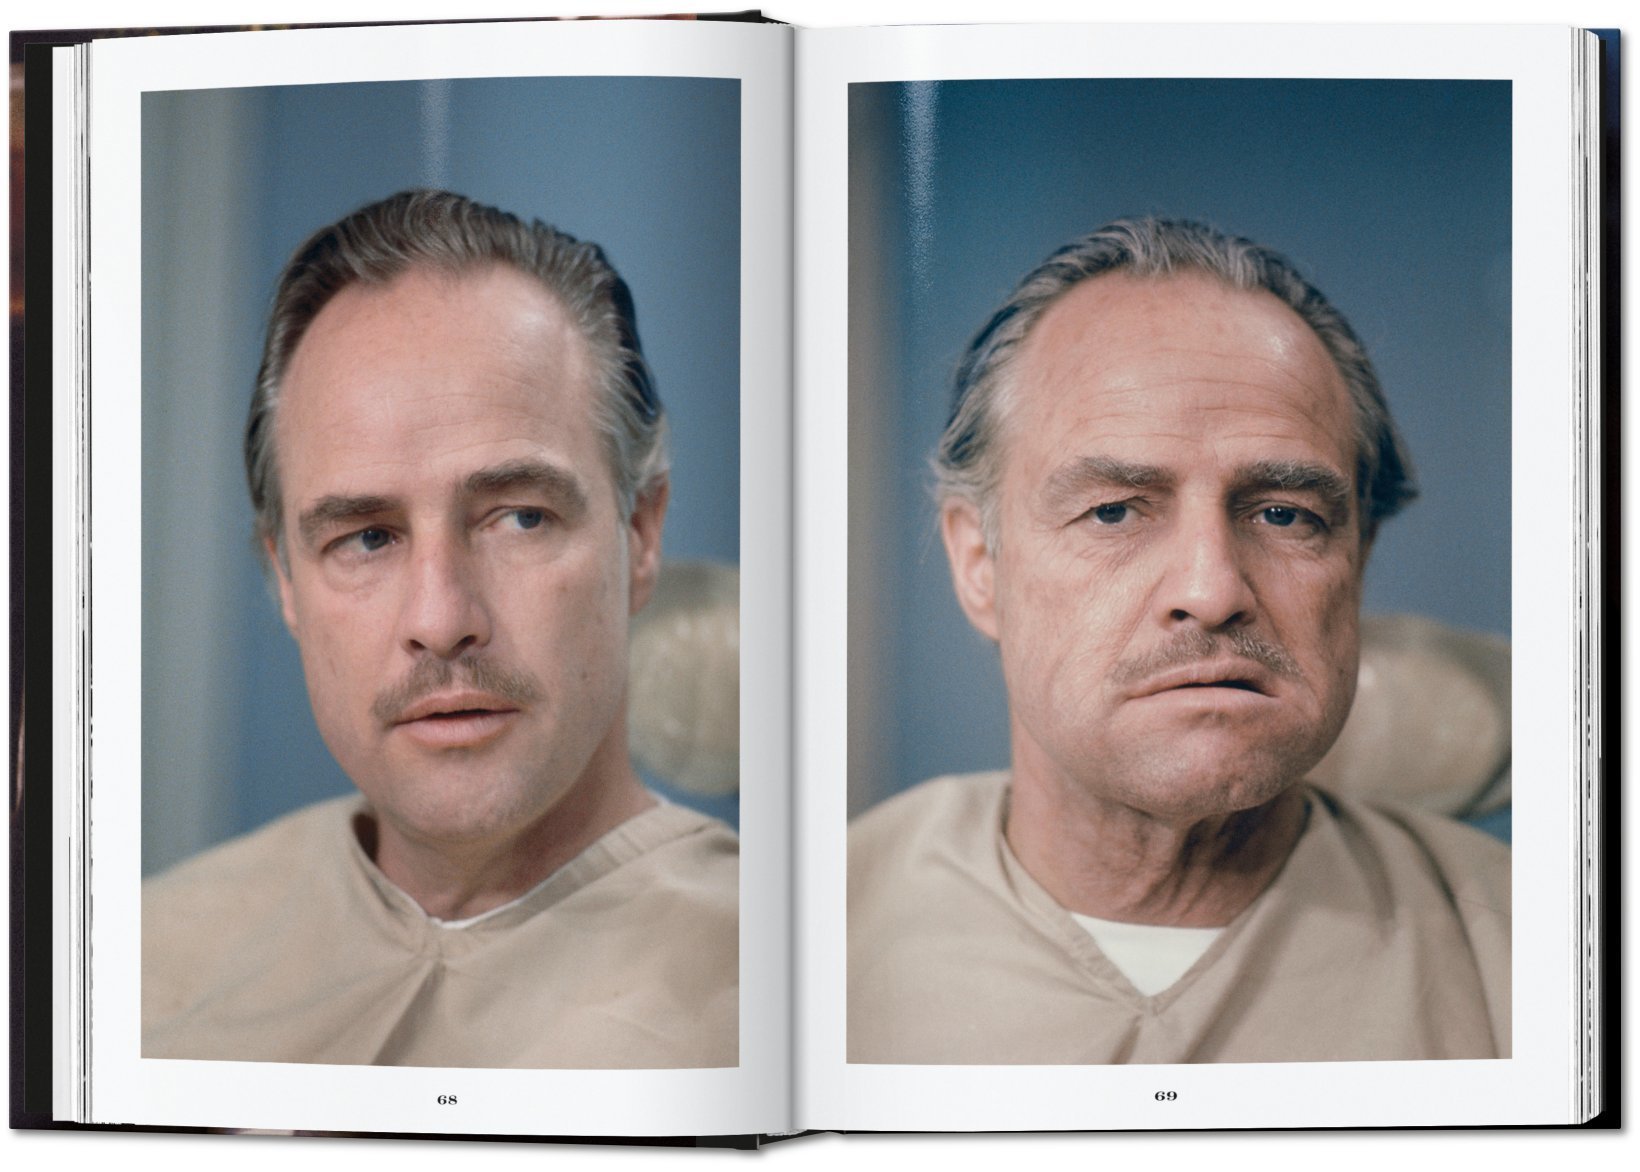 Steve Schapiro. The Godfather Family Album. 40 series